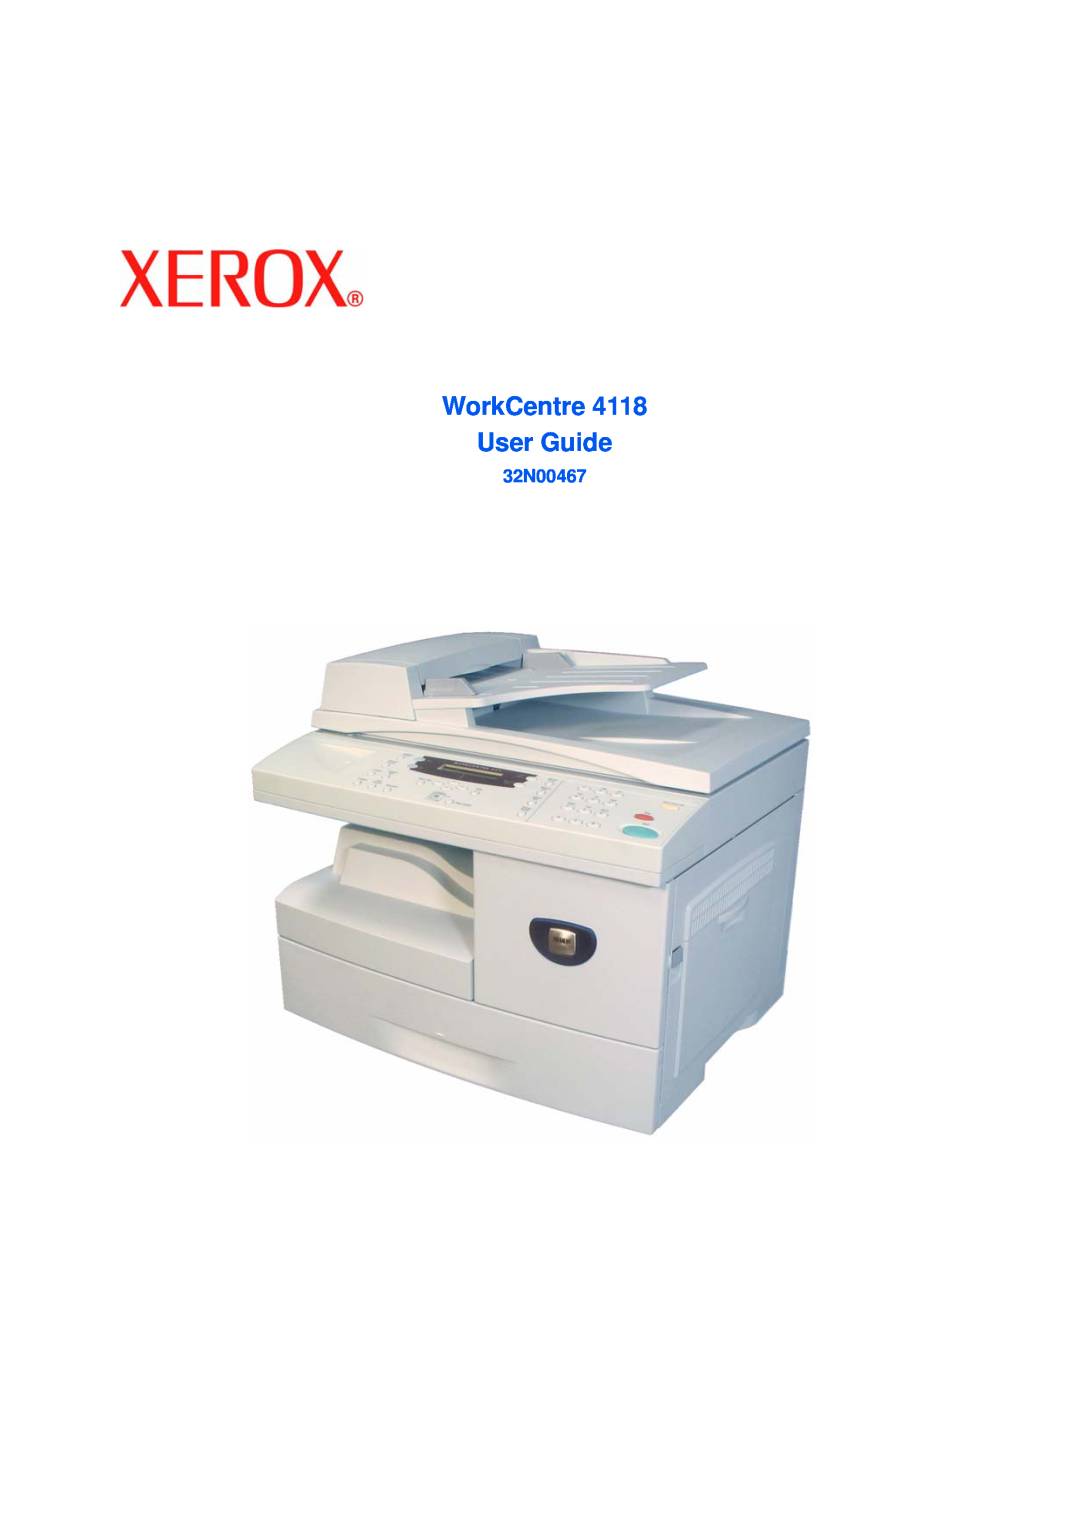 Xerox 32N00467 manual WorkCentre, User Guide 